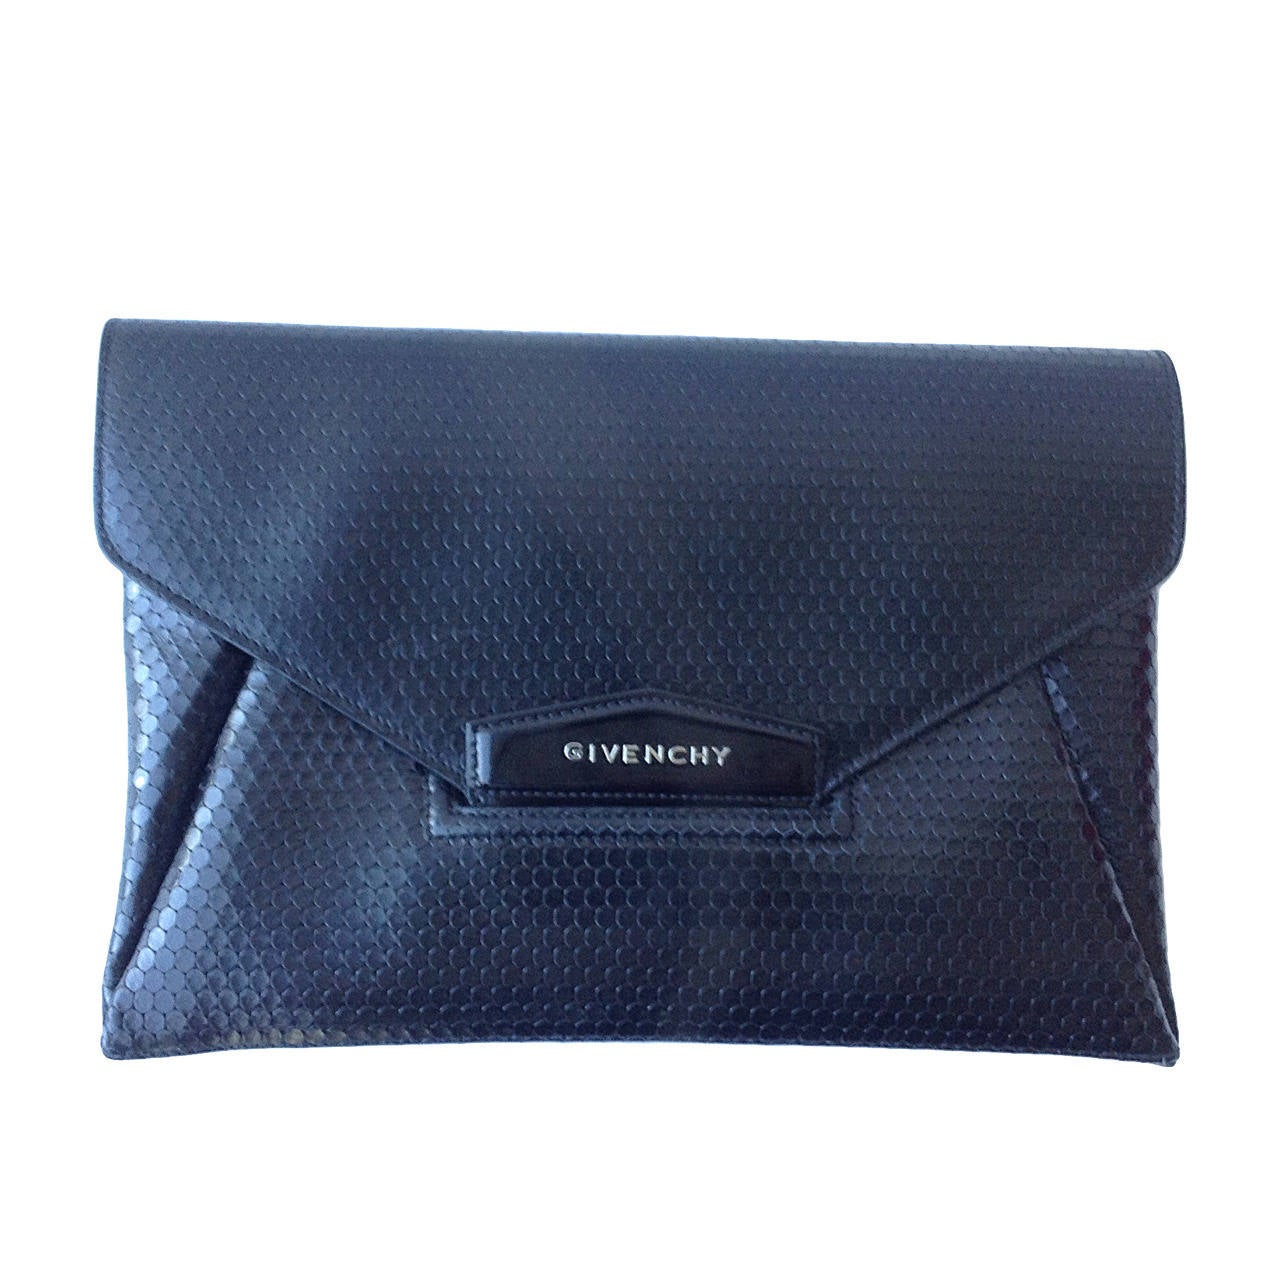 Givenchy Black leather Antigona envelope clutch For Sale